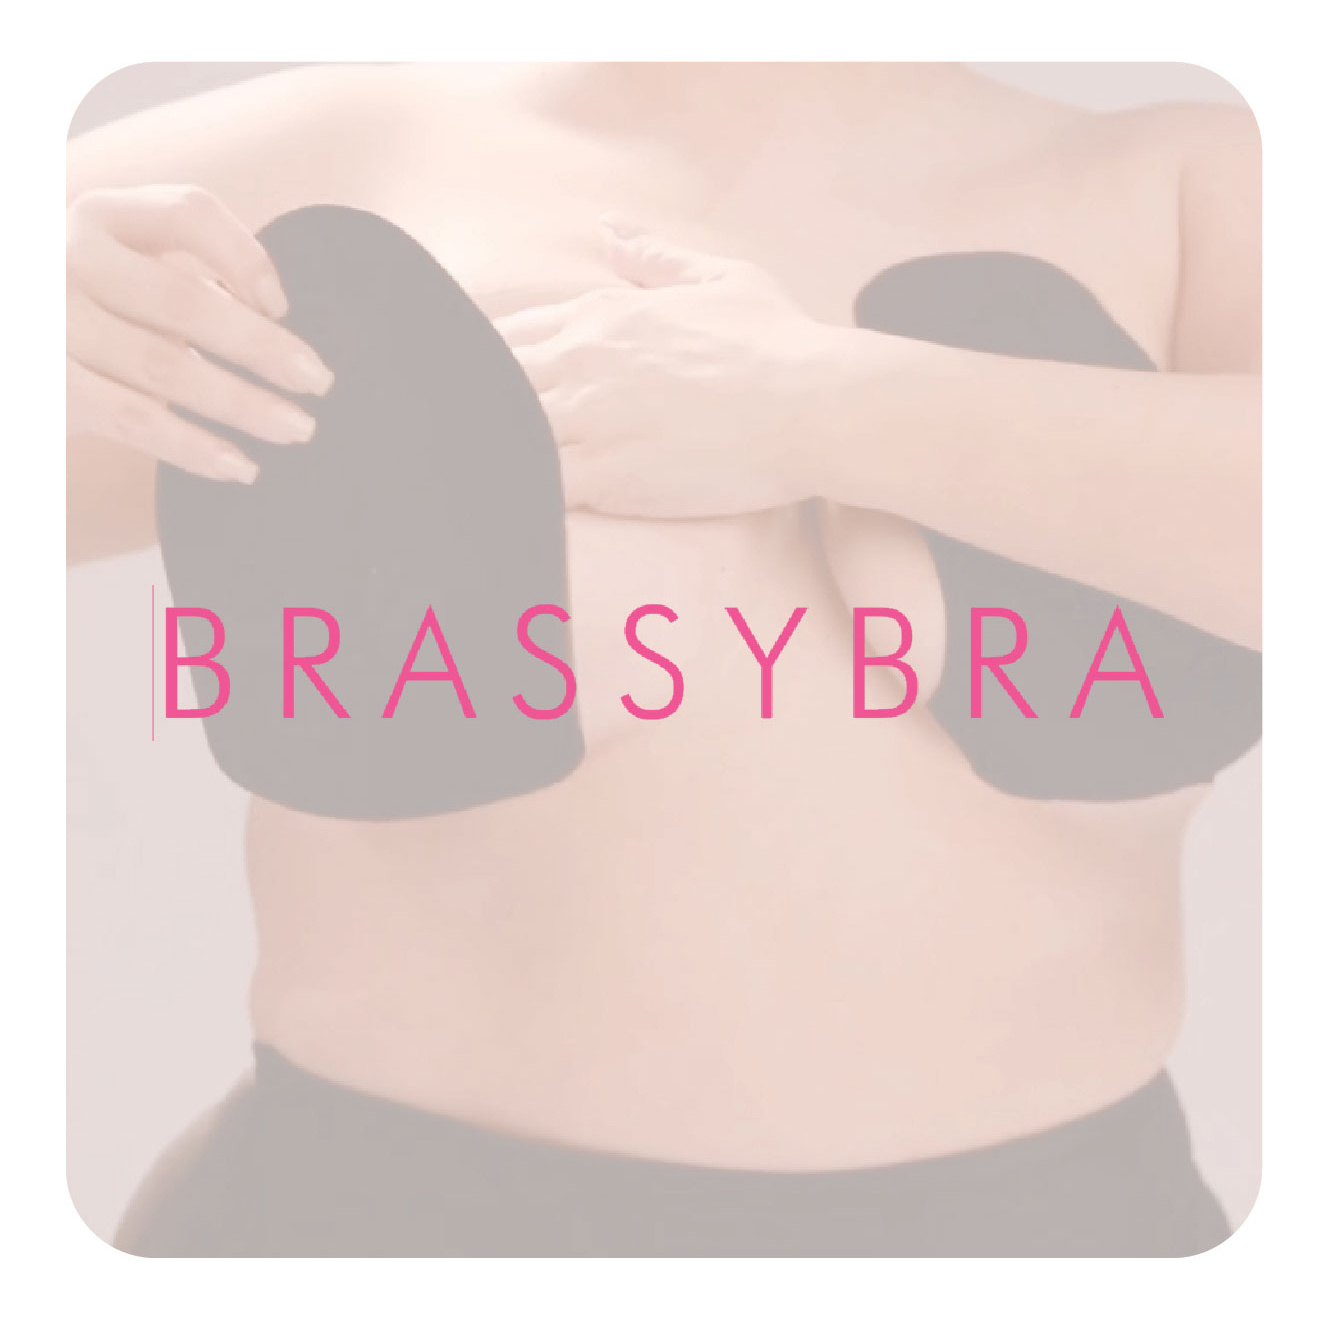 Brassybra Adhesive Bra - Vanilla